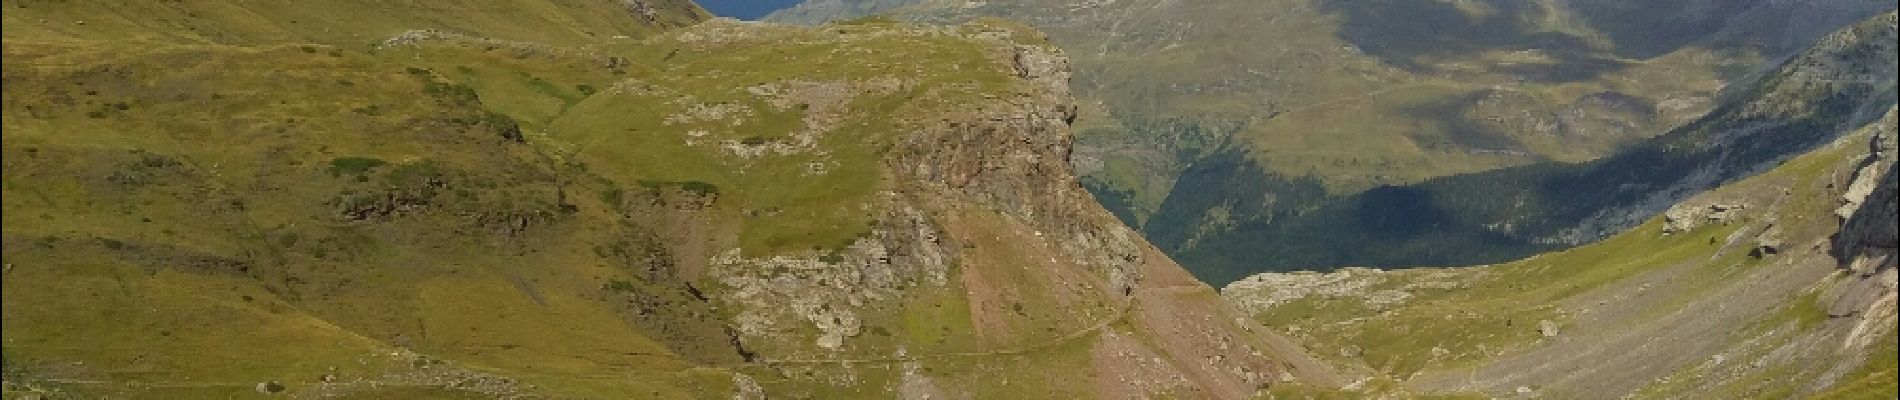 Excursión Senderismo Gavarnie-Gèdre - Pyrénées 2017 Échelles de Sarradet - Photo